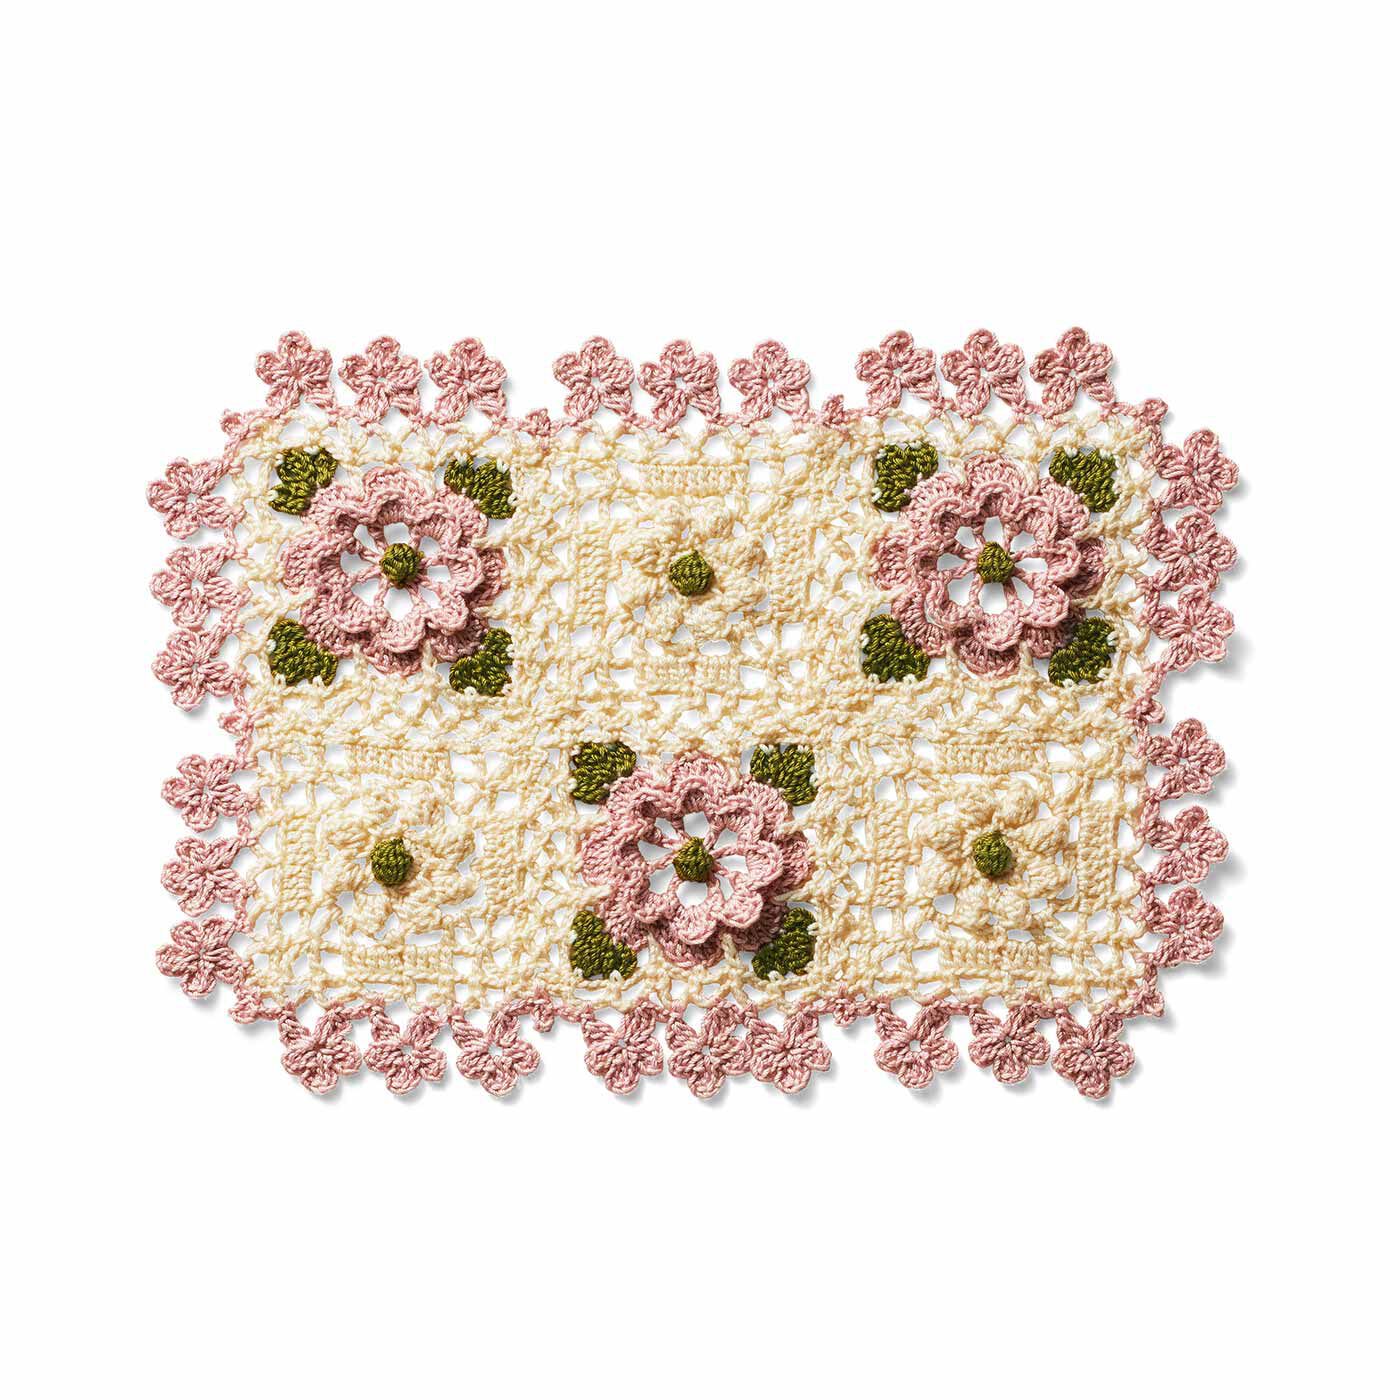 Couturier|レース編みで咲かせる愛らしい花々 立体お花ドイリーの会|オールドローズ